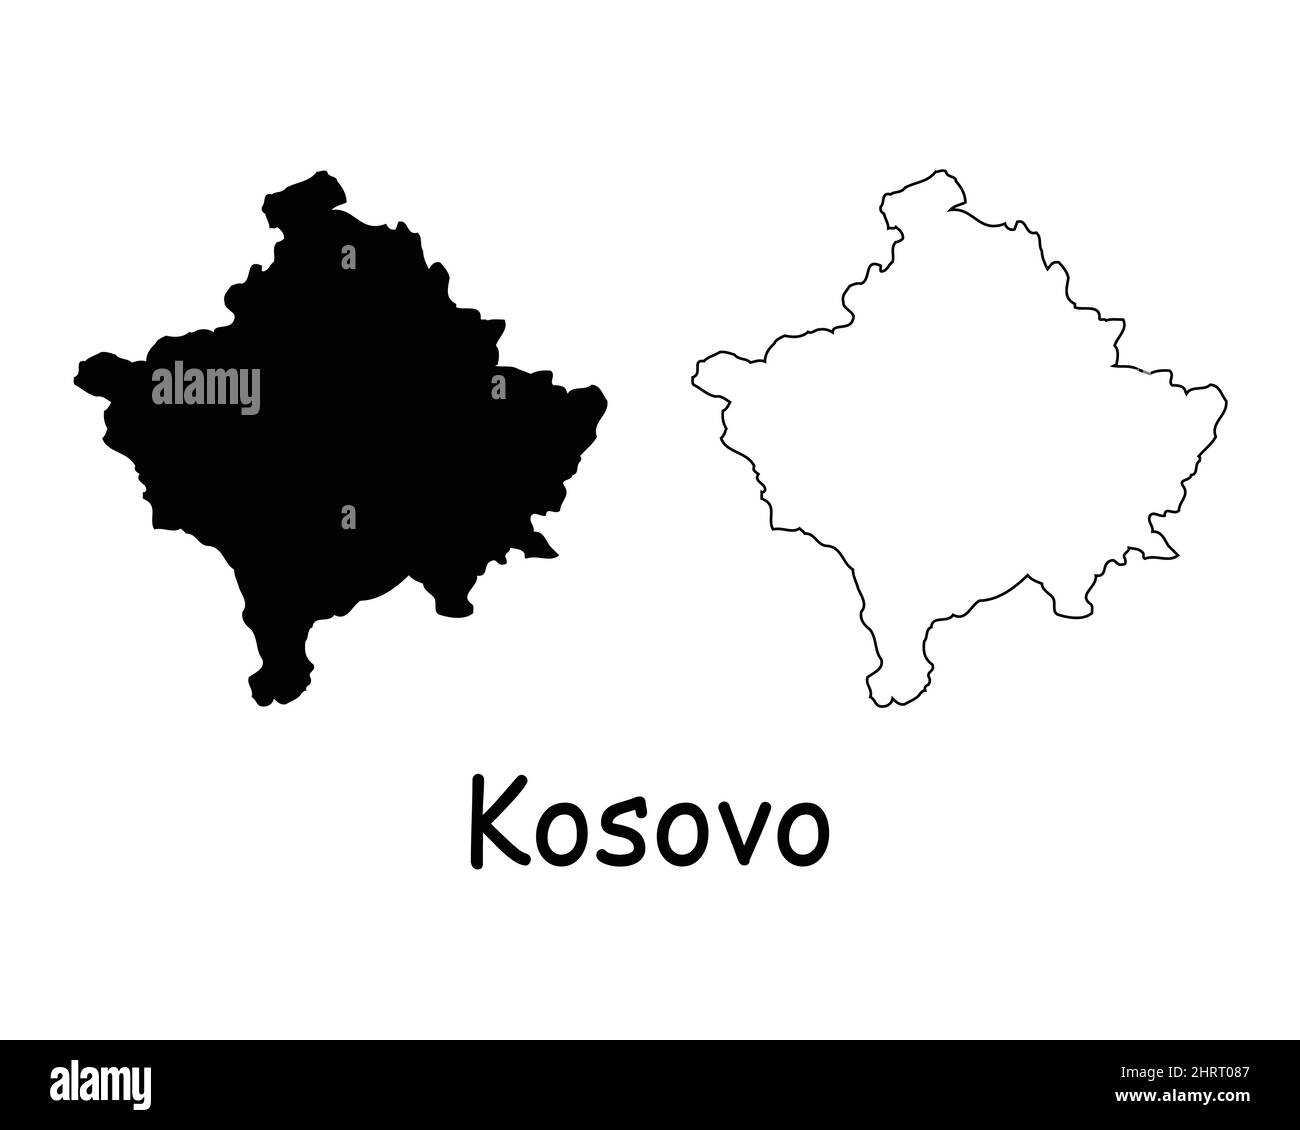 Kosovo Map. Kosovar Kosovan Black silhouette and outline map isolated on white background. Republic of Kosovo Territory Border Boundary Line Icon Sign Stock Vector